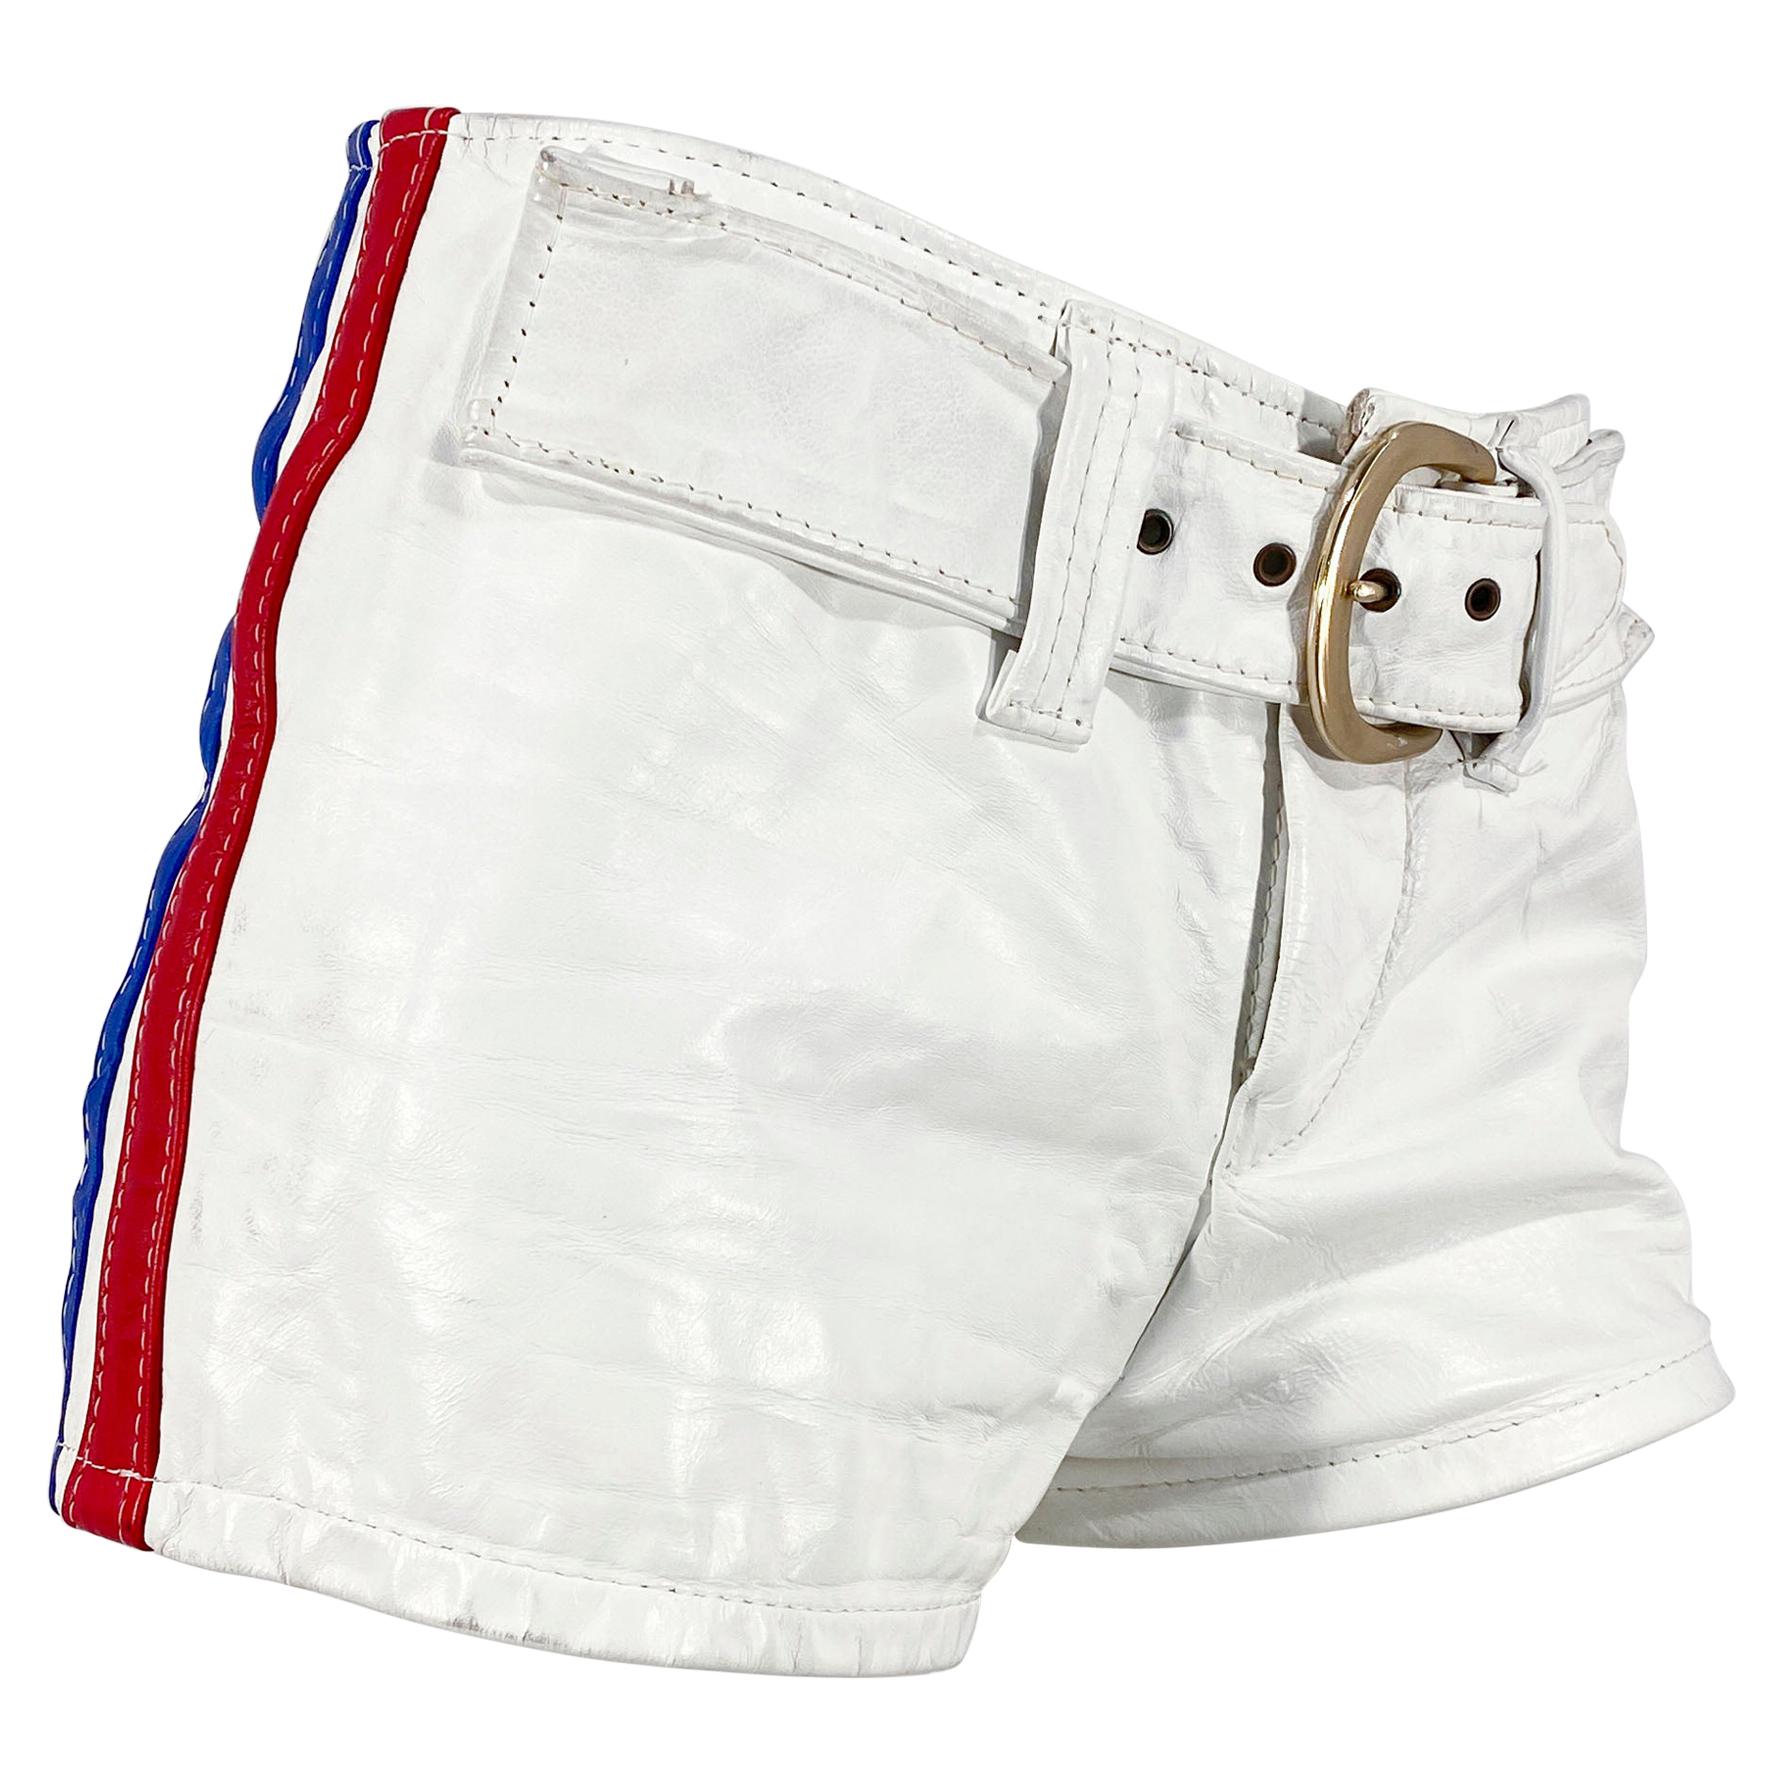 1960s/1970s White Leather Go-go Shorts